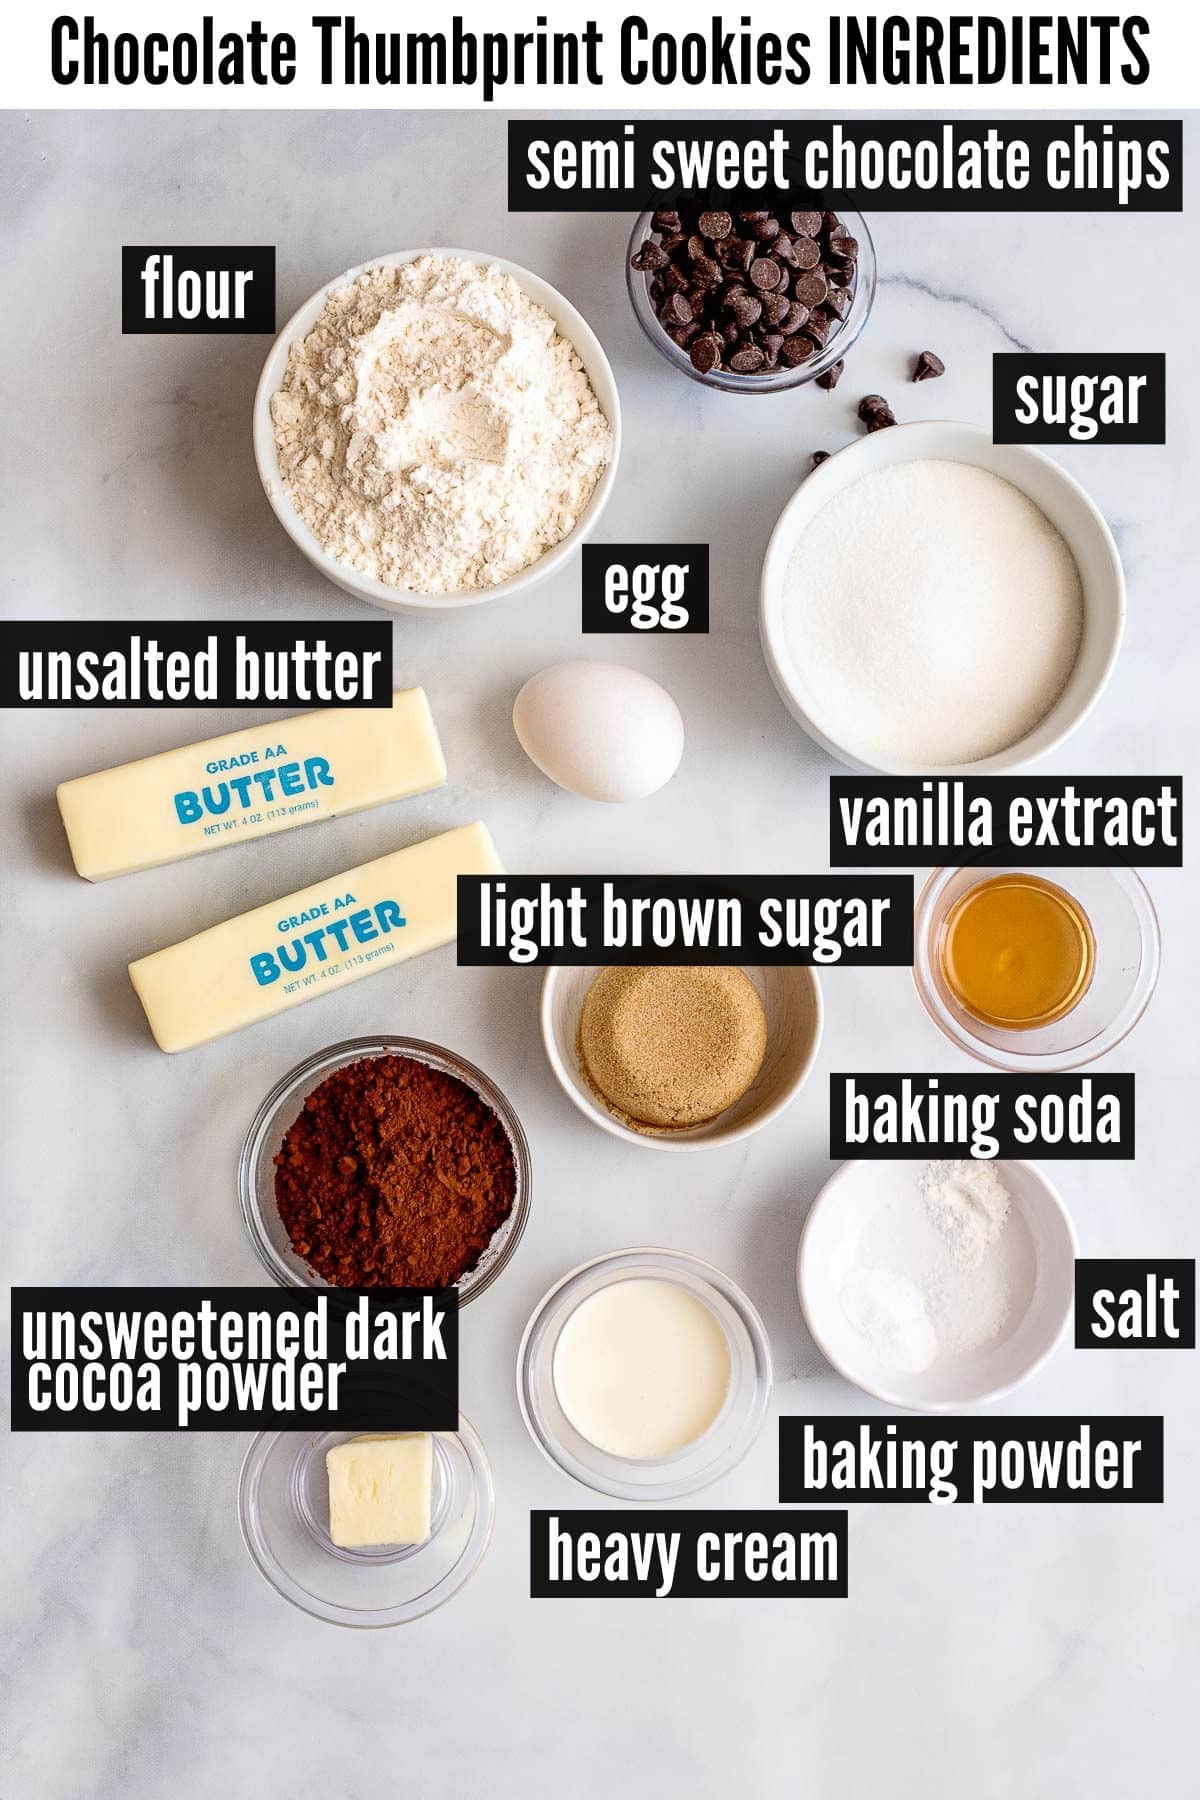 chocolate thumbprint cookies labelled ingredients.